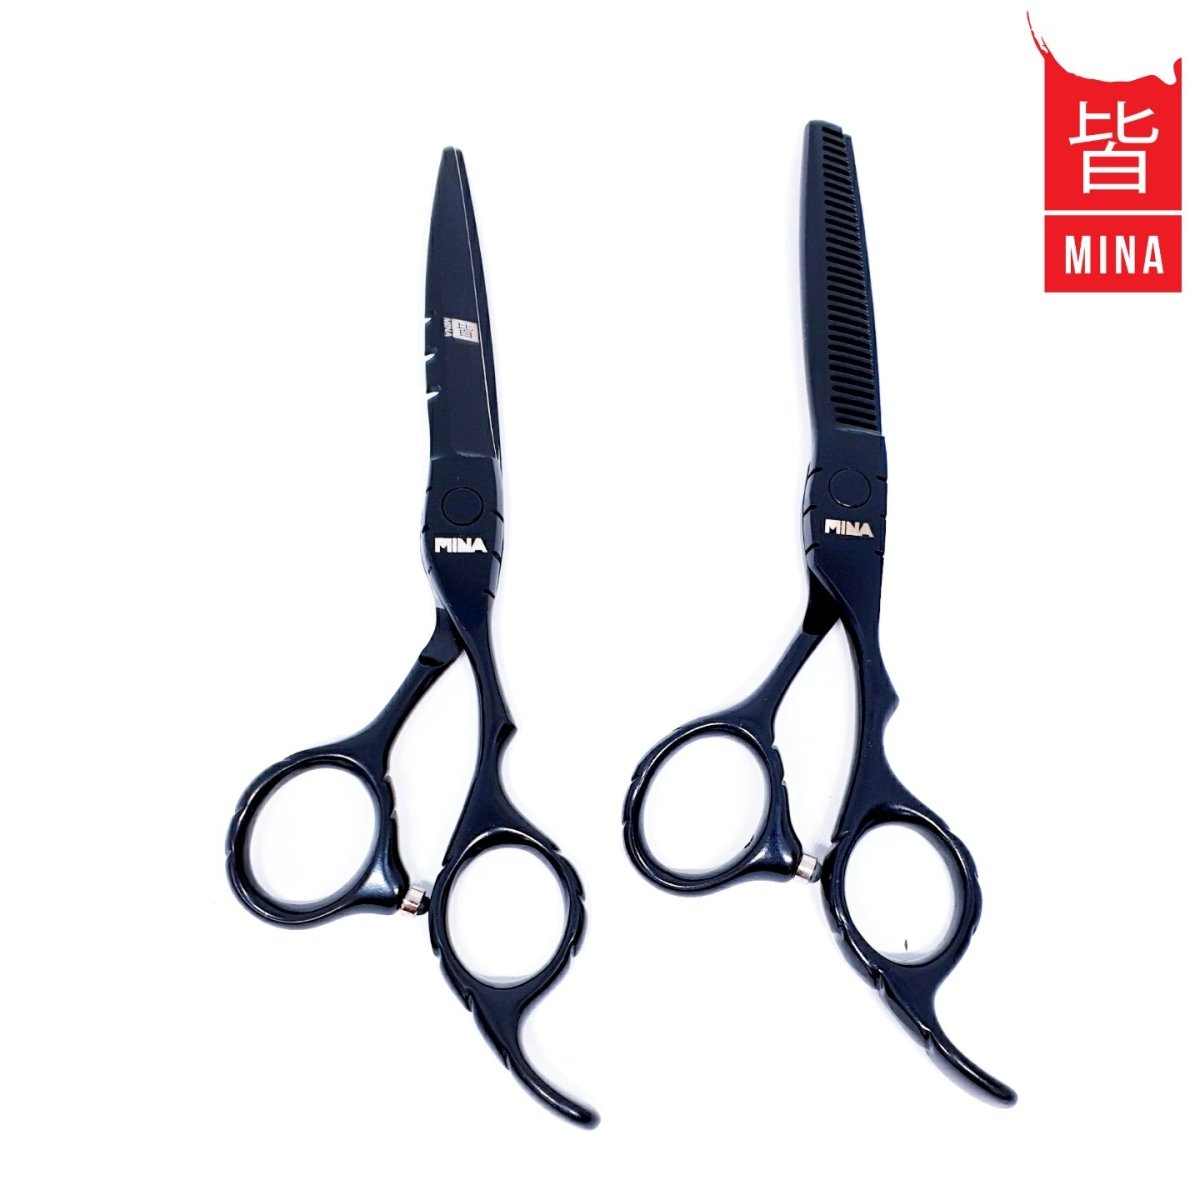 Mina Matte Black hair cutting shears for home use